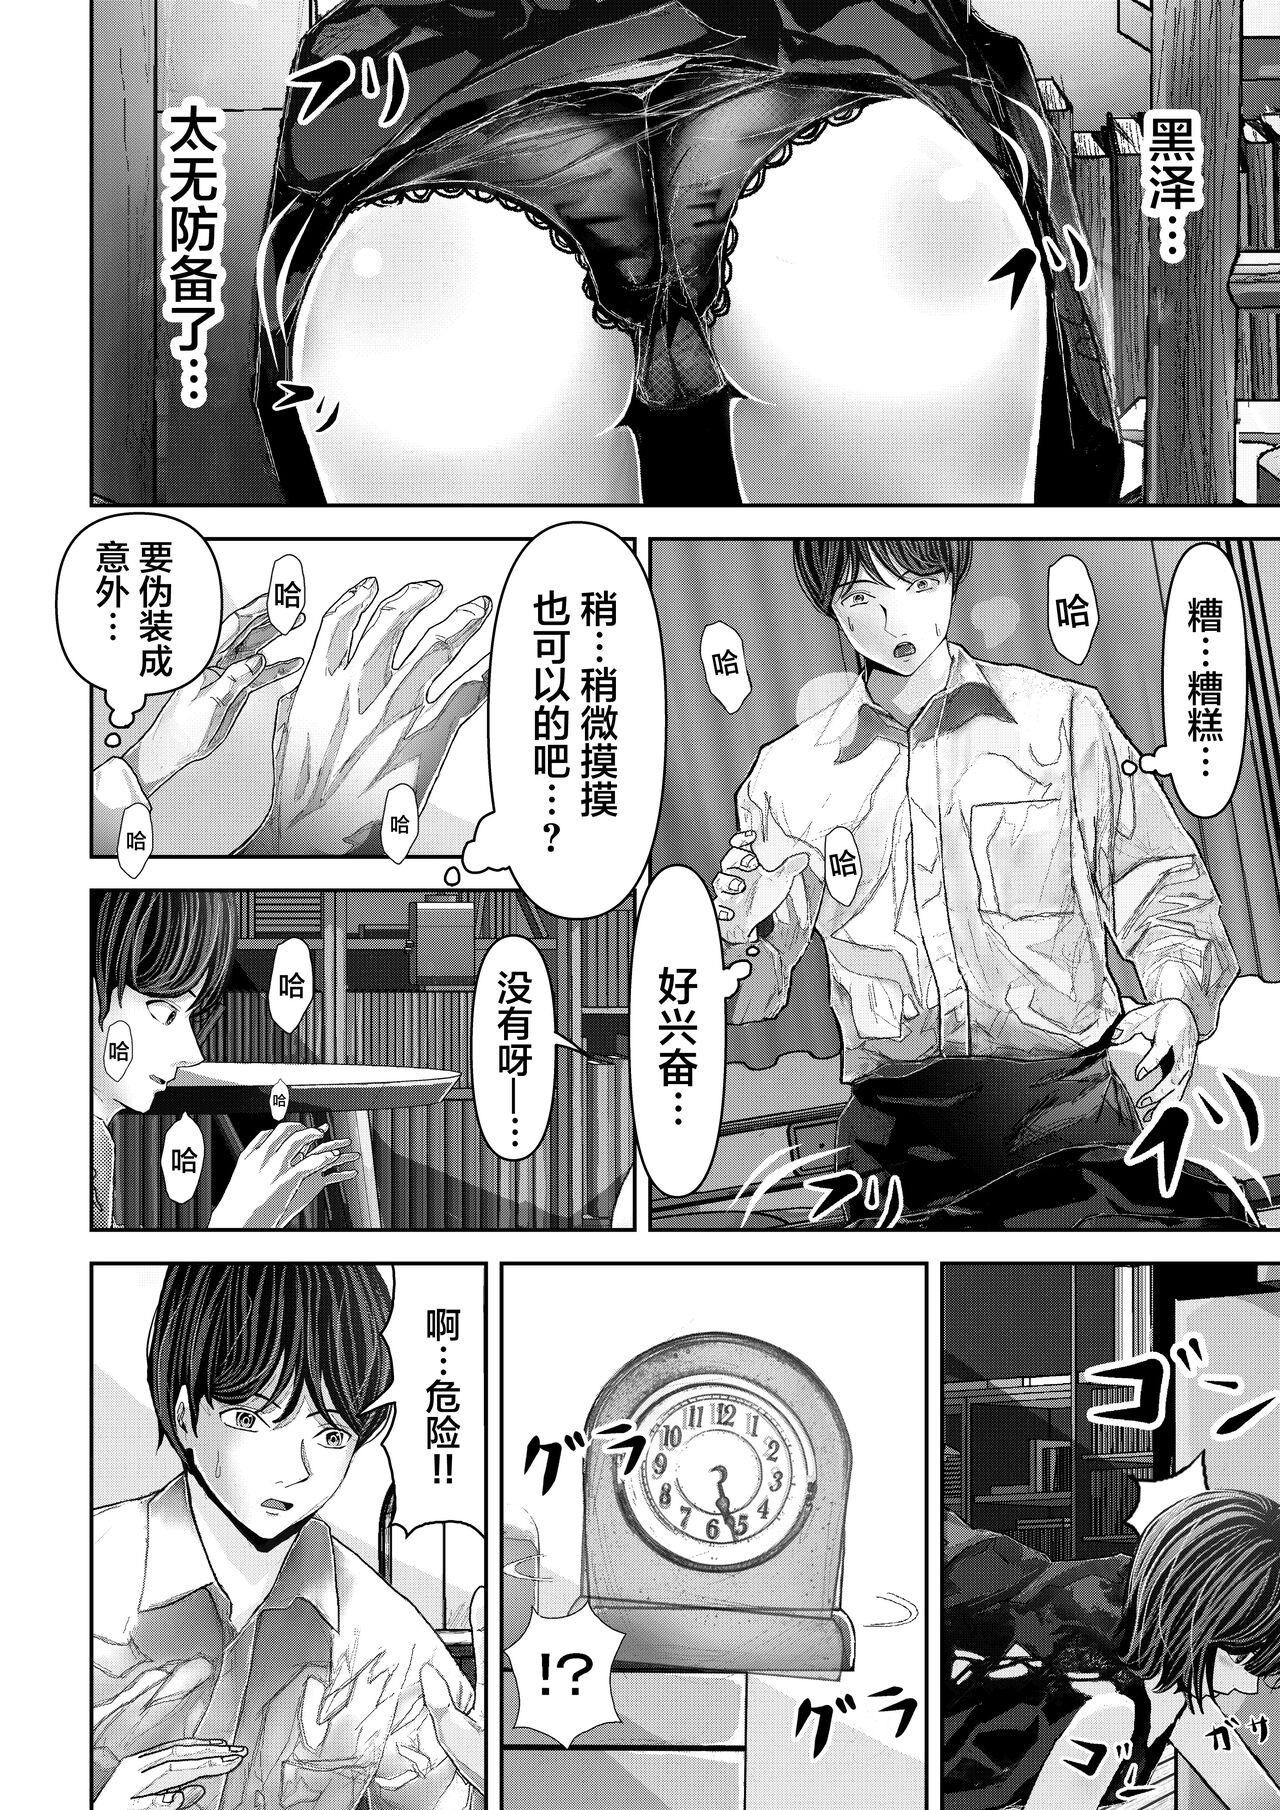 Massages Tomodachi no Kanojo ga Muboubi Sugite Osotte shimau Hanashi People Having Sex - Page 7